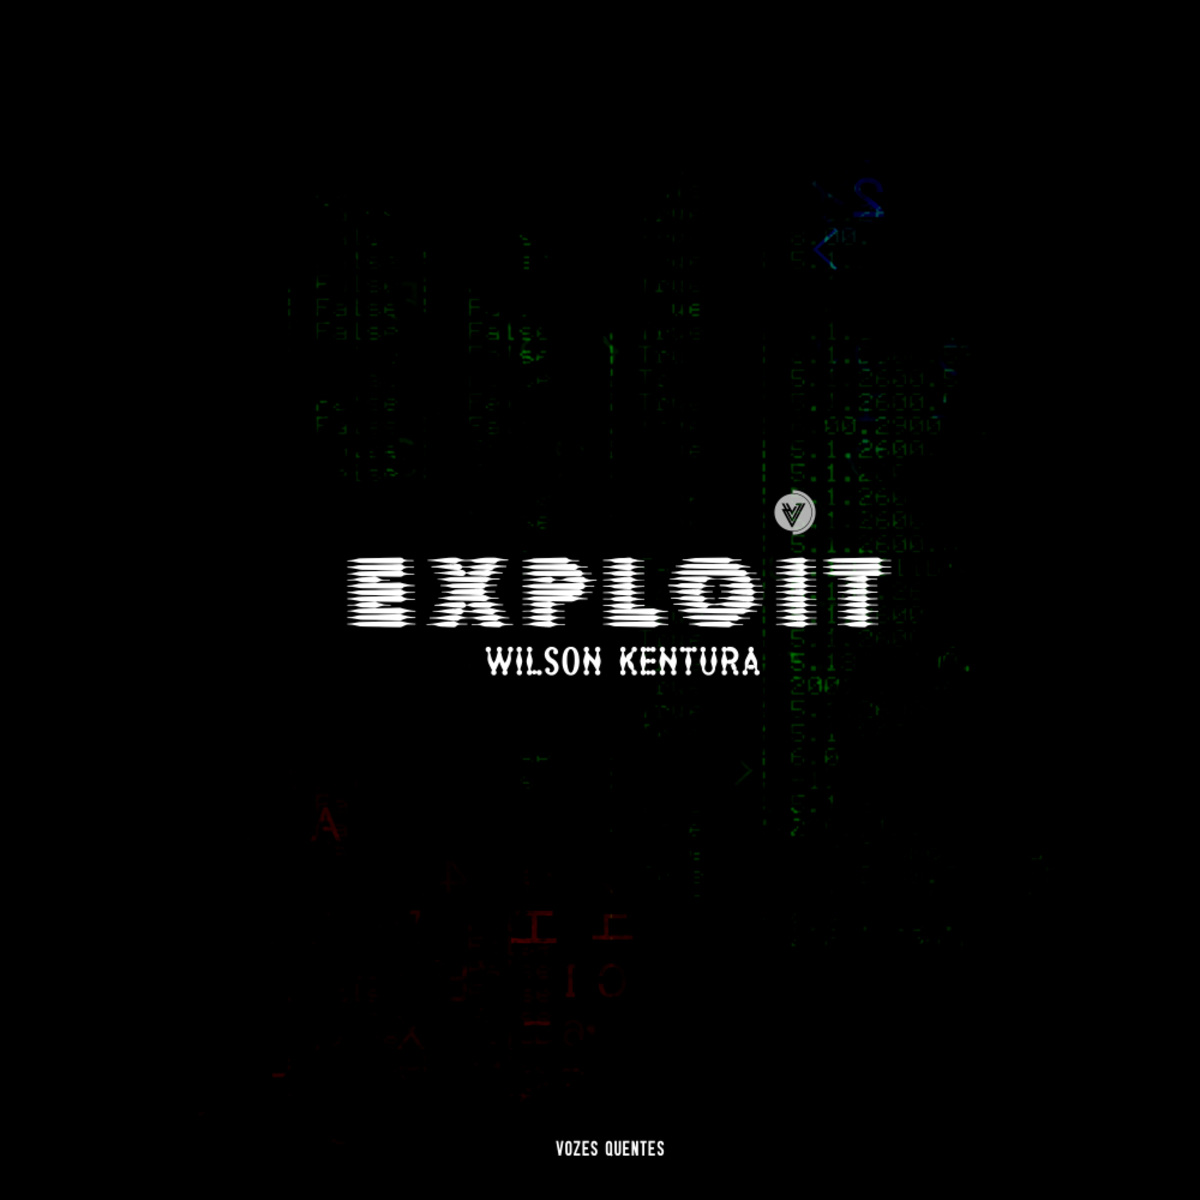 Wilson Kentura - Exploit / Vozes Quentes